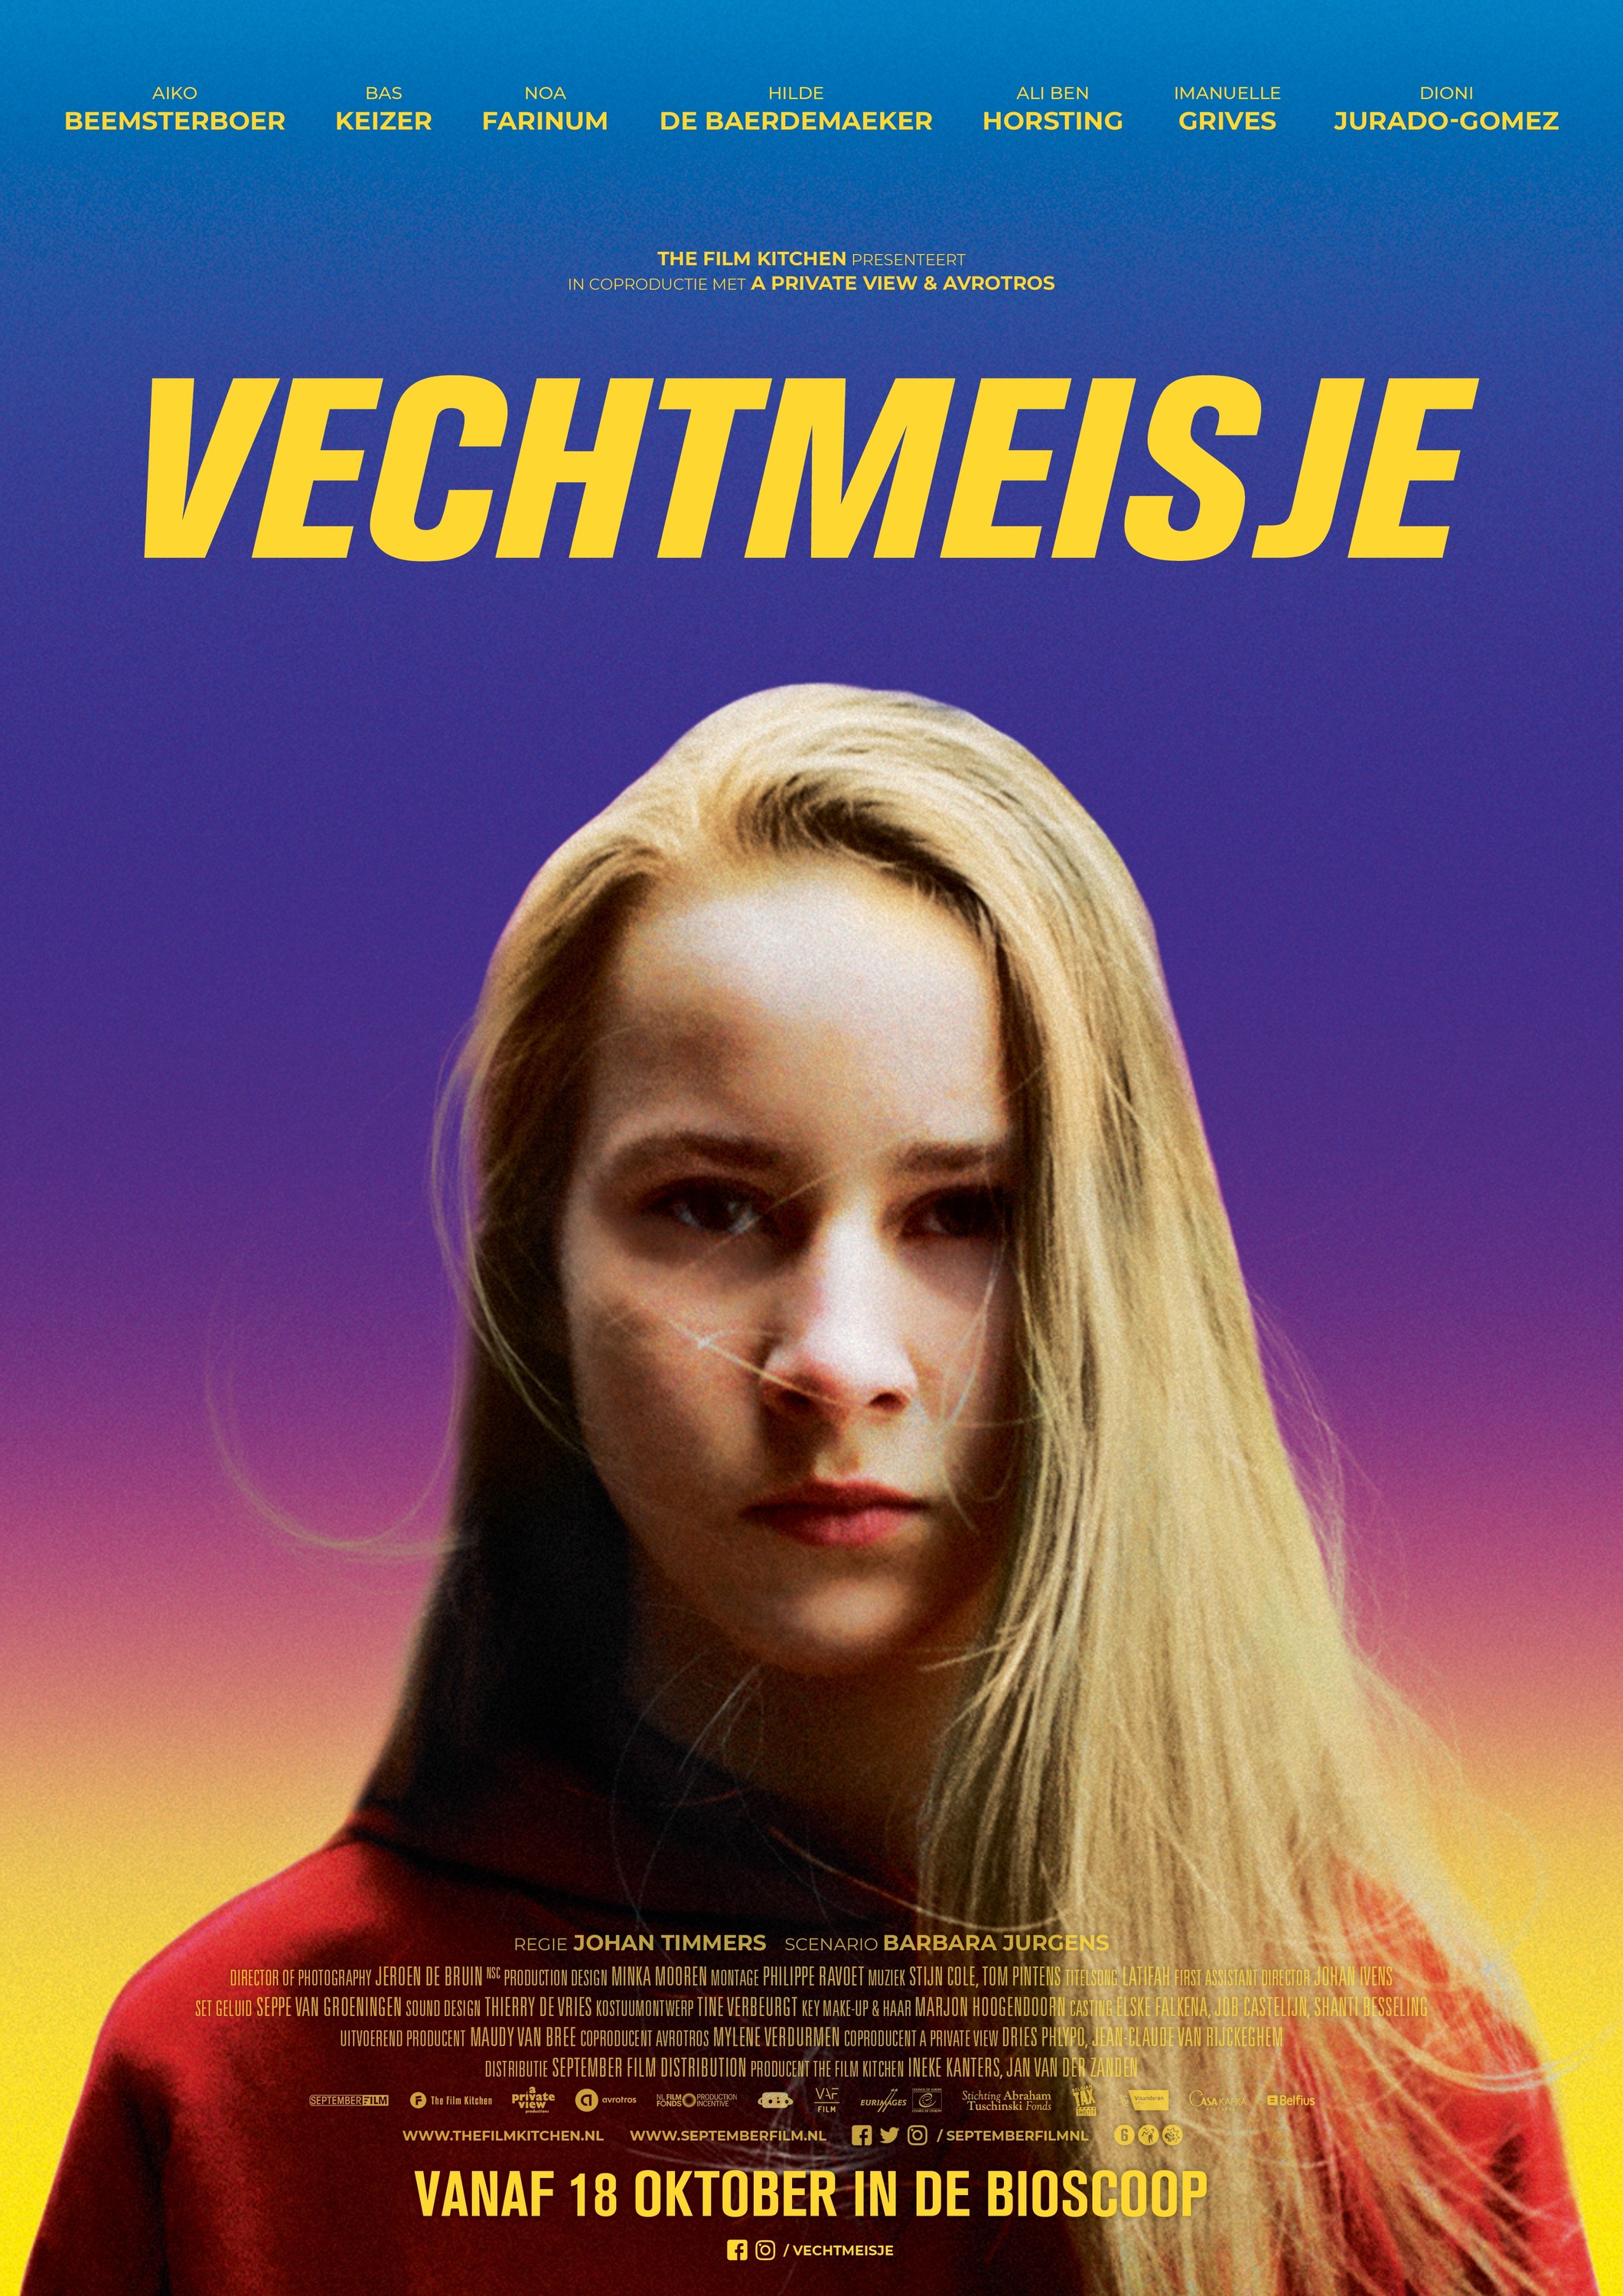 Mega Sized Movie Poster Image for Vechtmeisje 